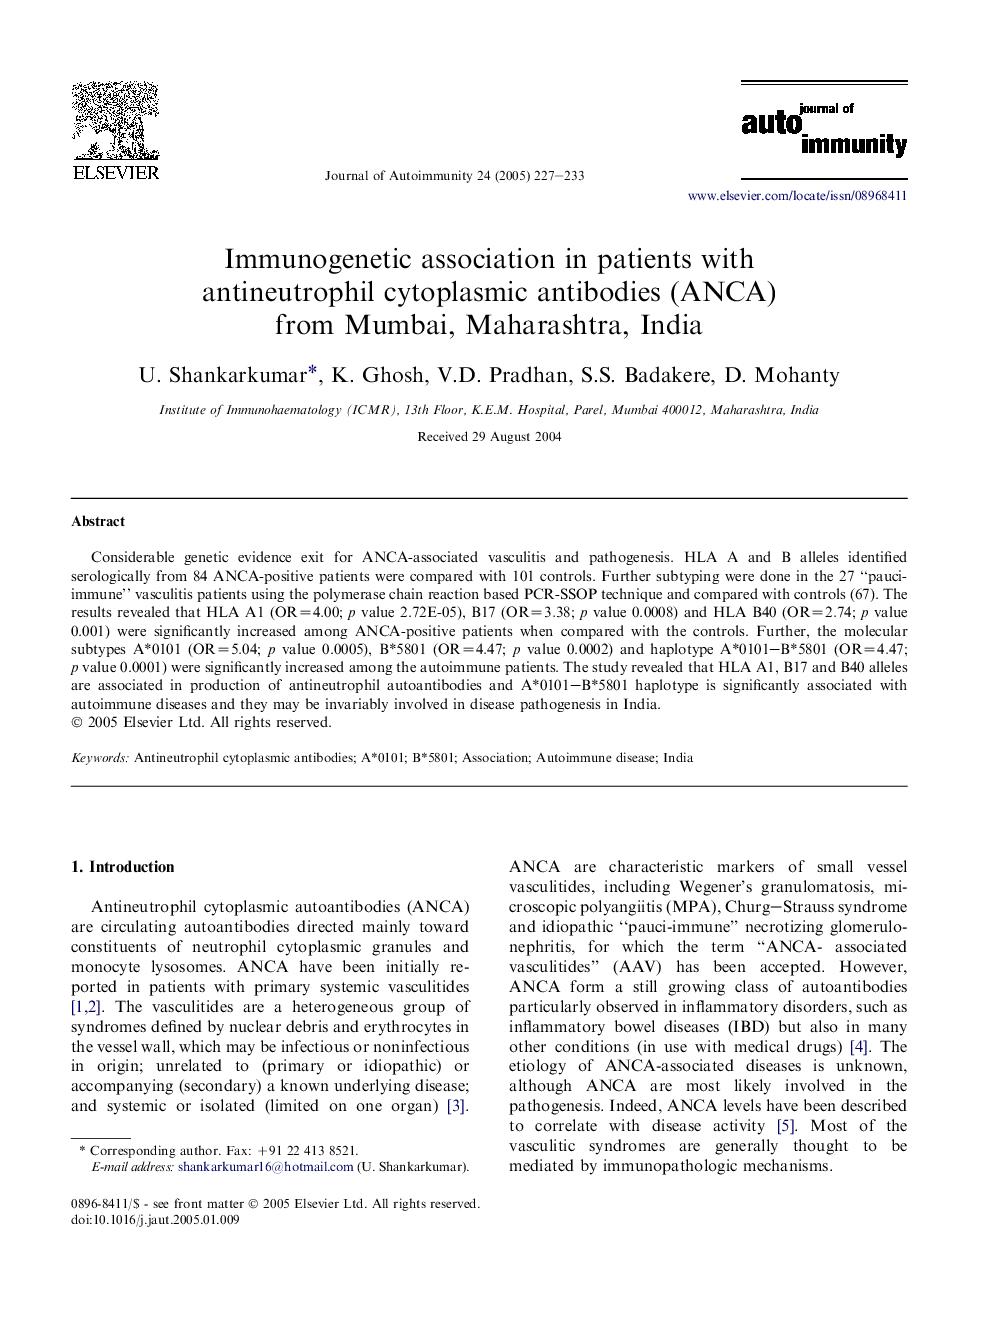 Immunogenetic association in patients with antineutrophil cytoplasmic antibodies (ANCA) from Mumbai, Maharashtra, India